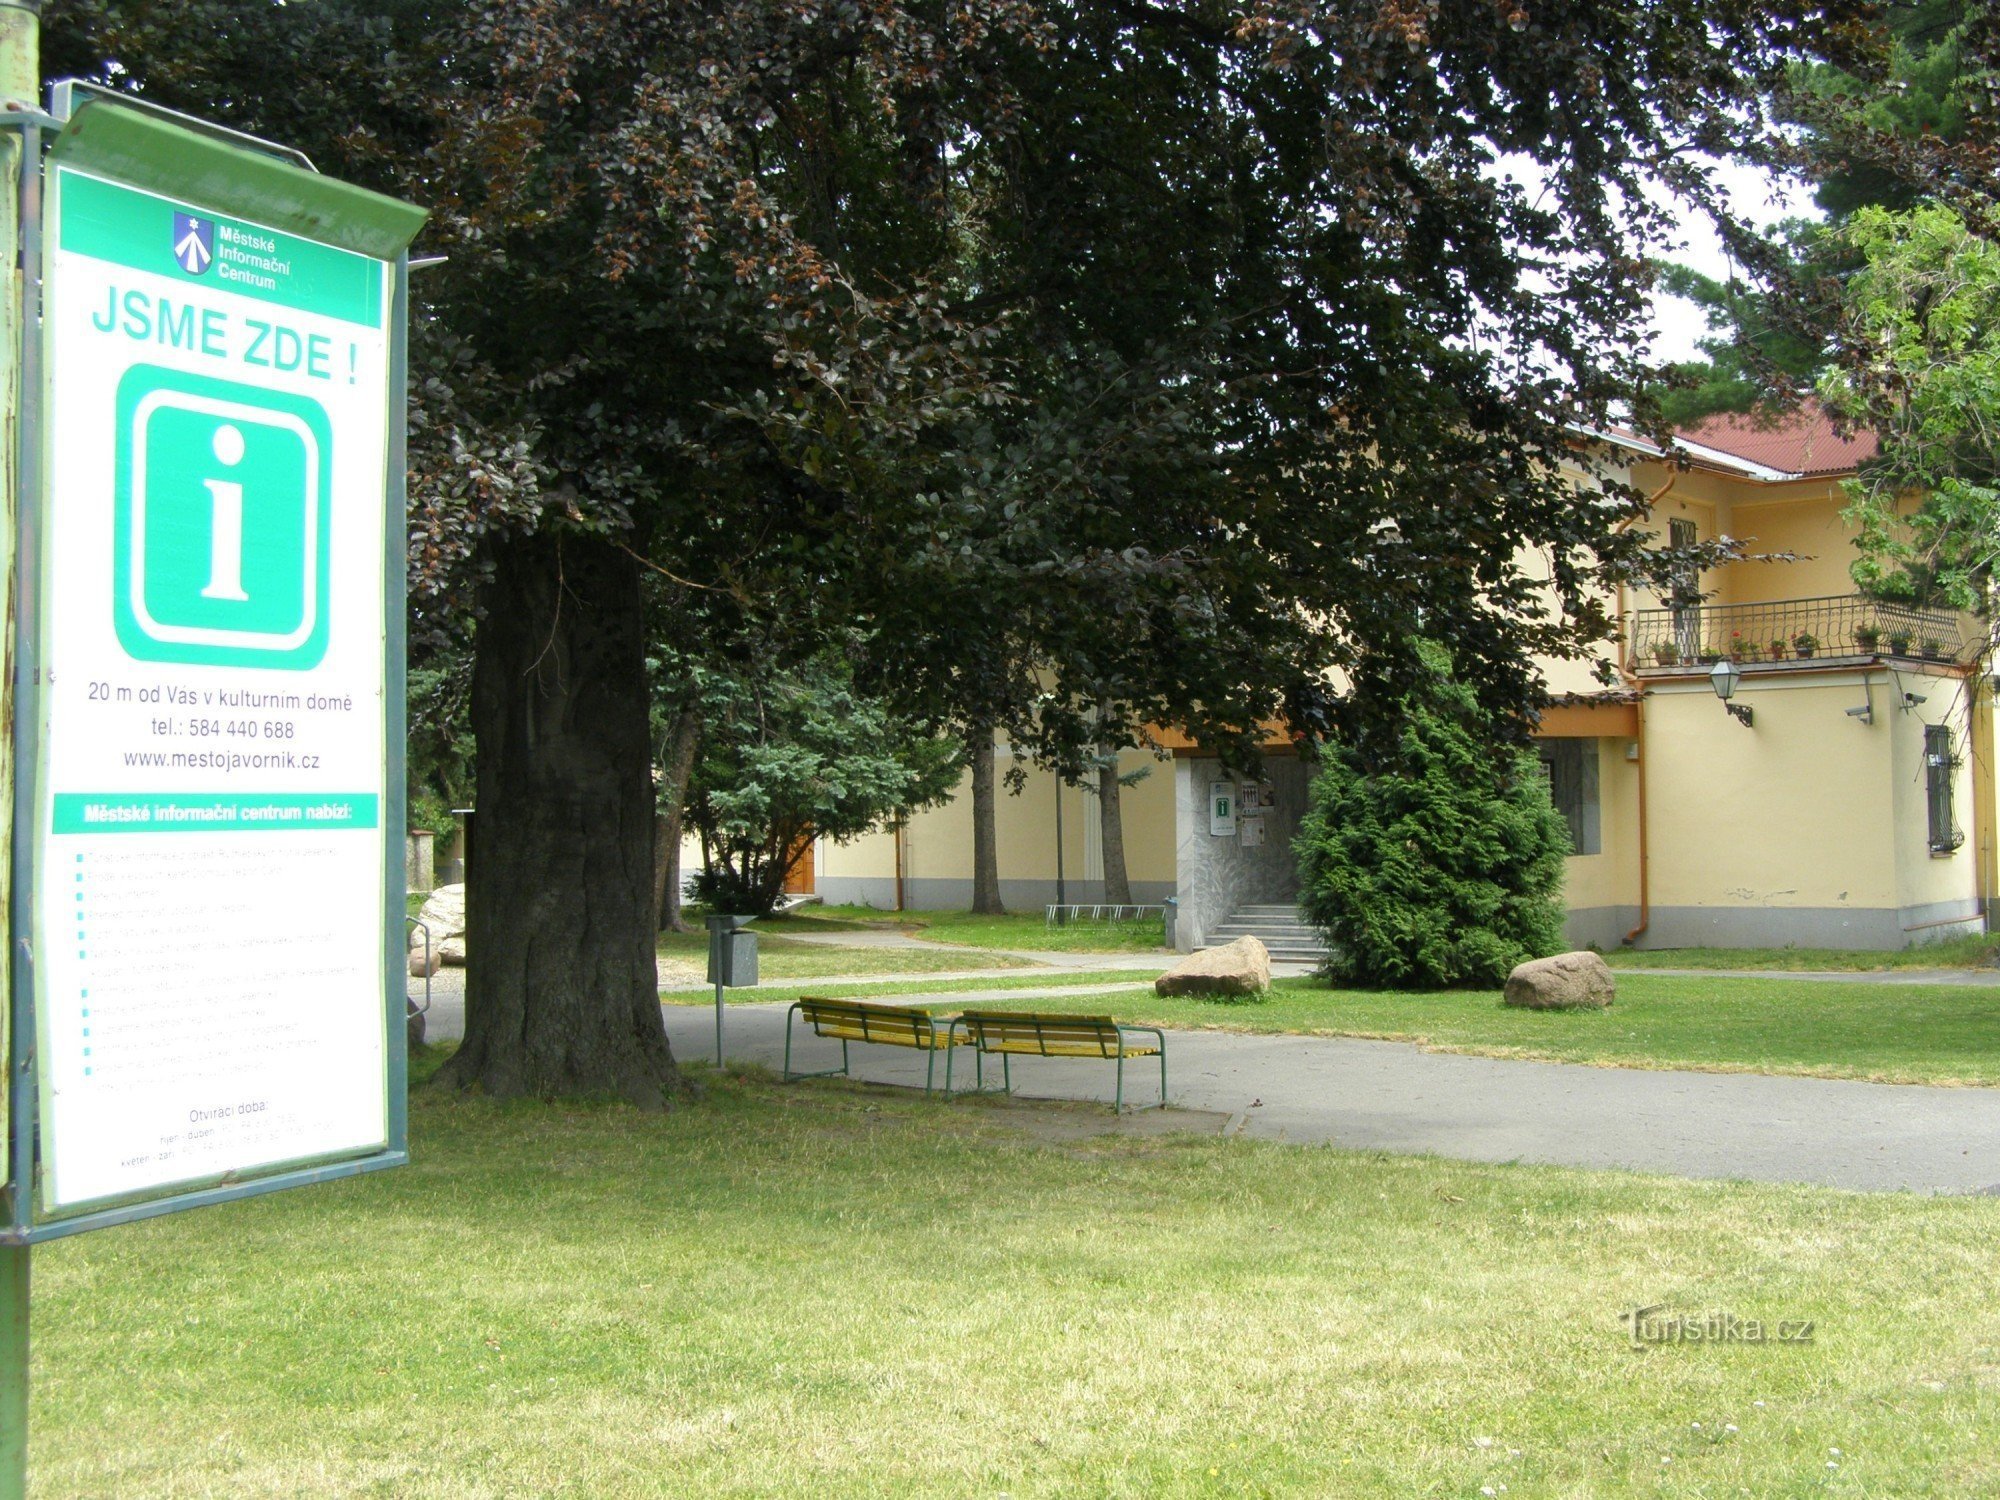 Javorník - városi információs központ